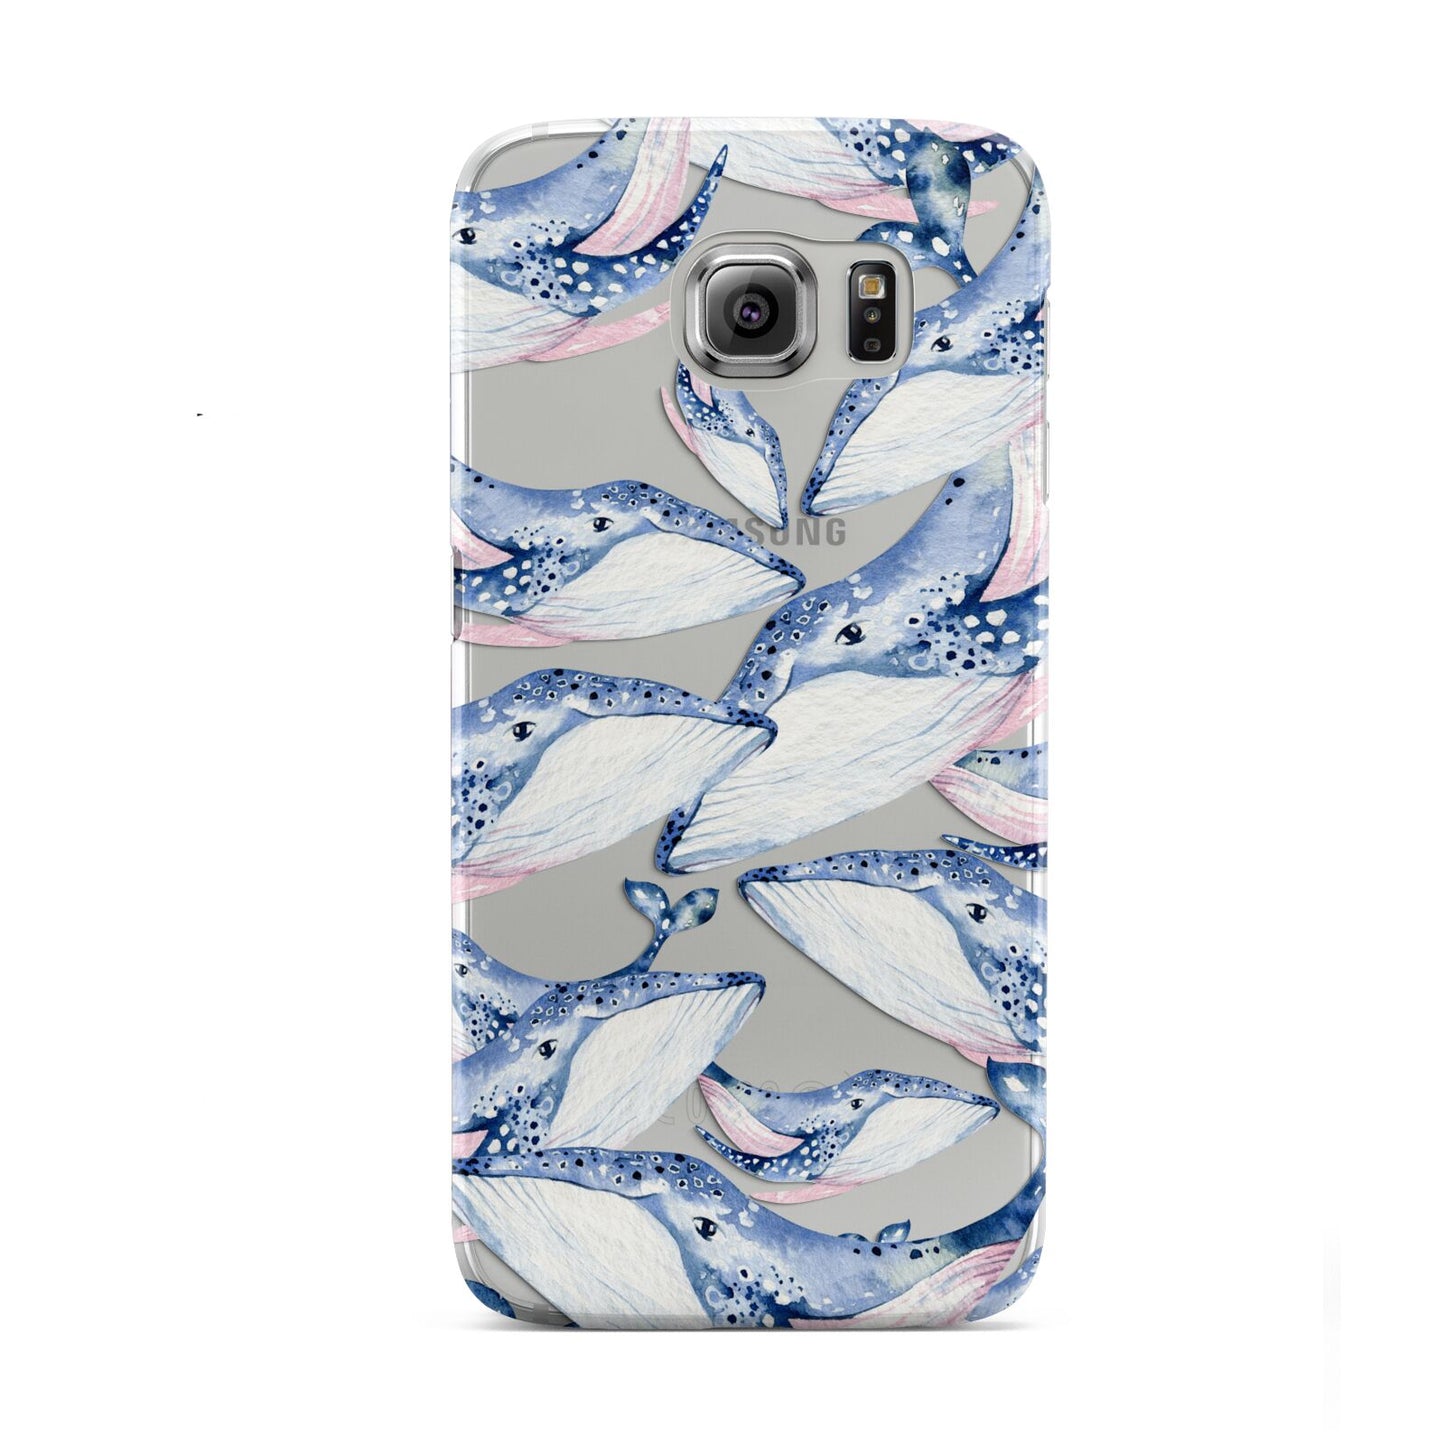 Whale Samsung Galaxy S6 Case